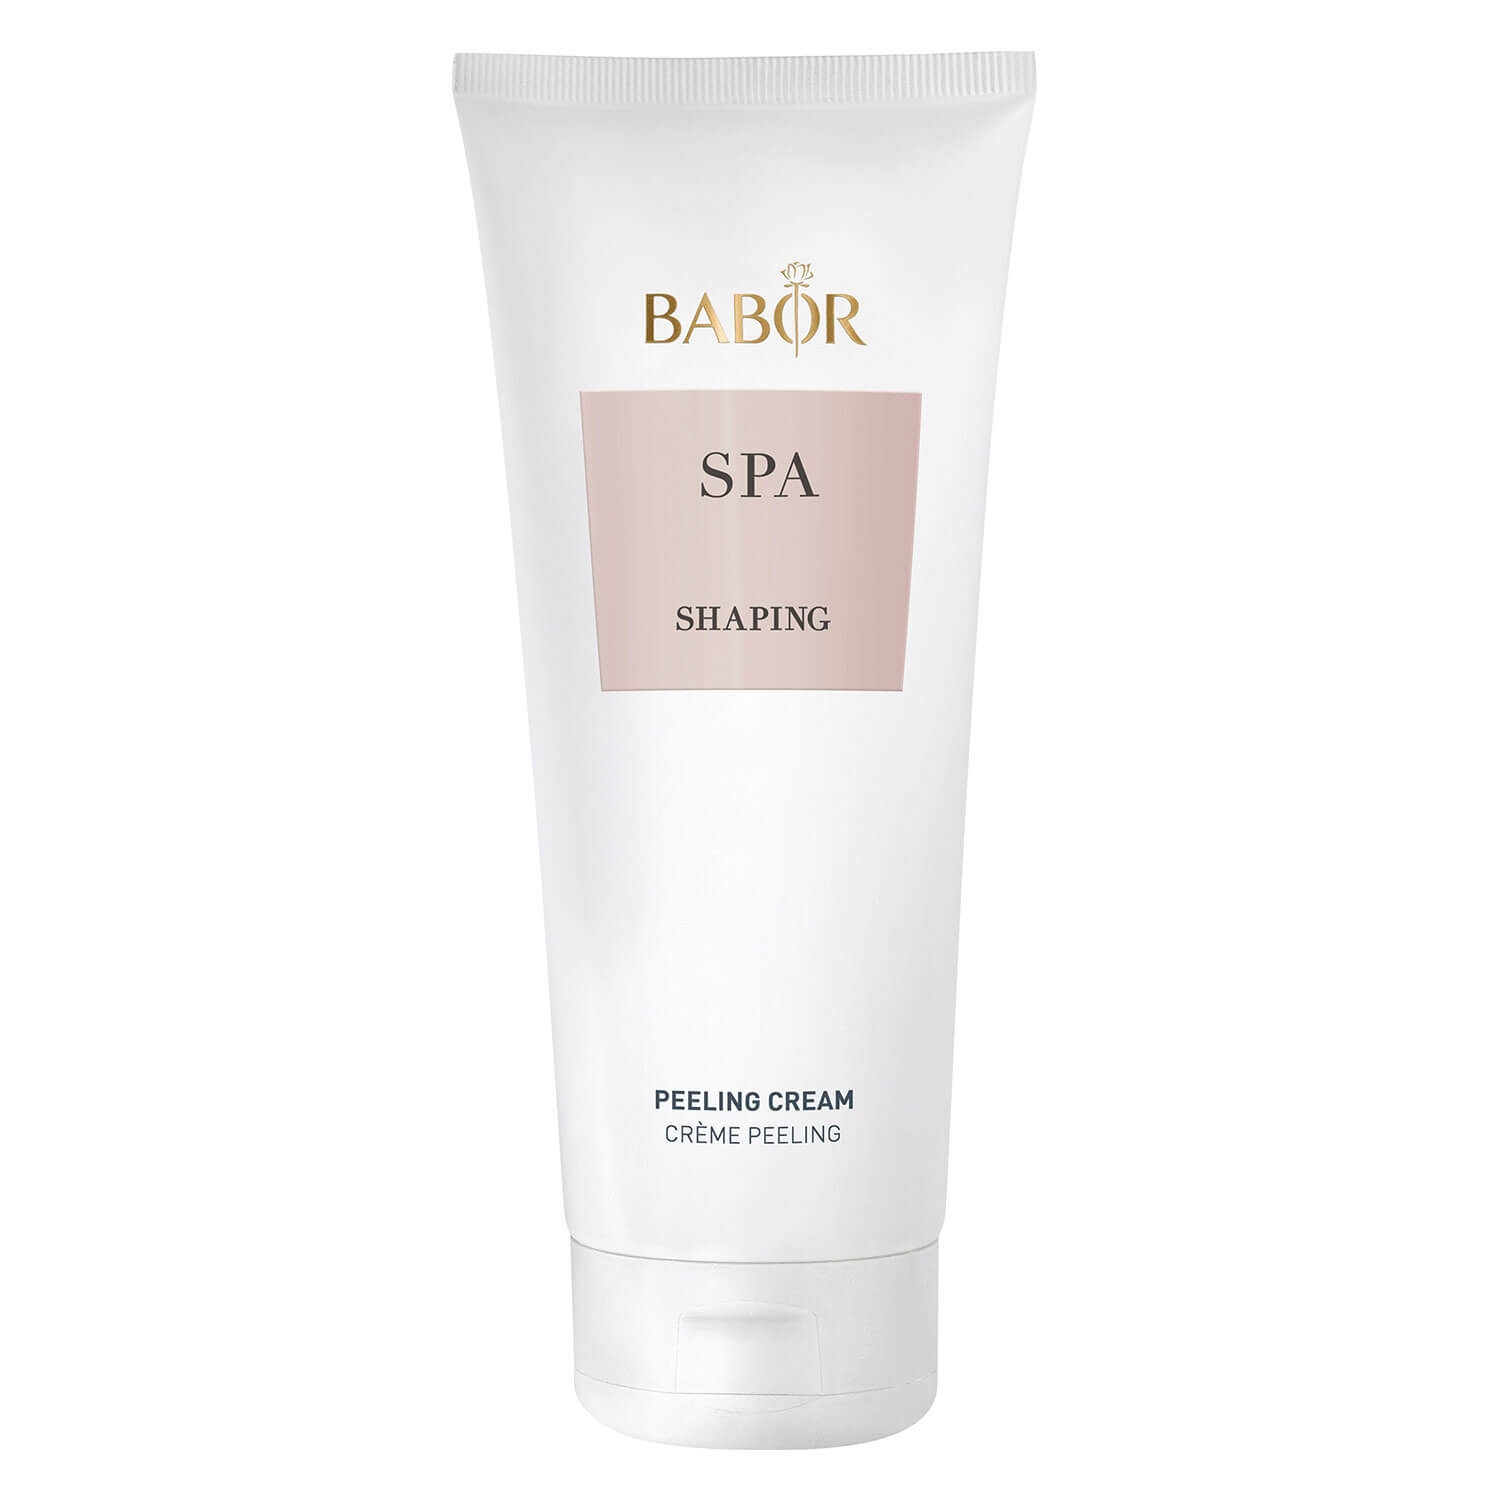 Produktbild von BABOR SPA - Shaping Peeling Cream